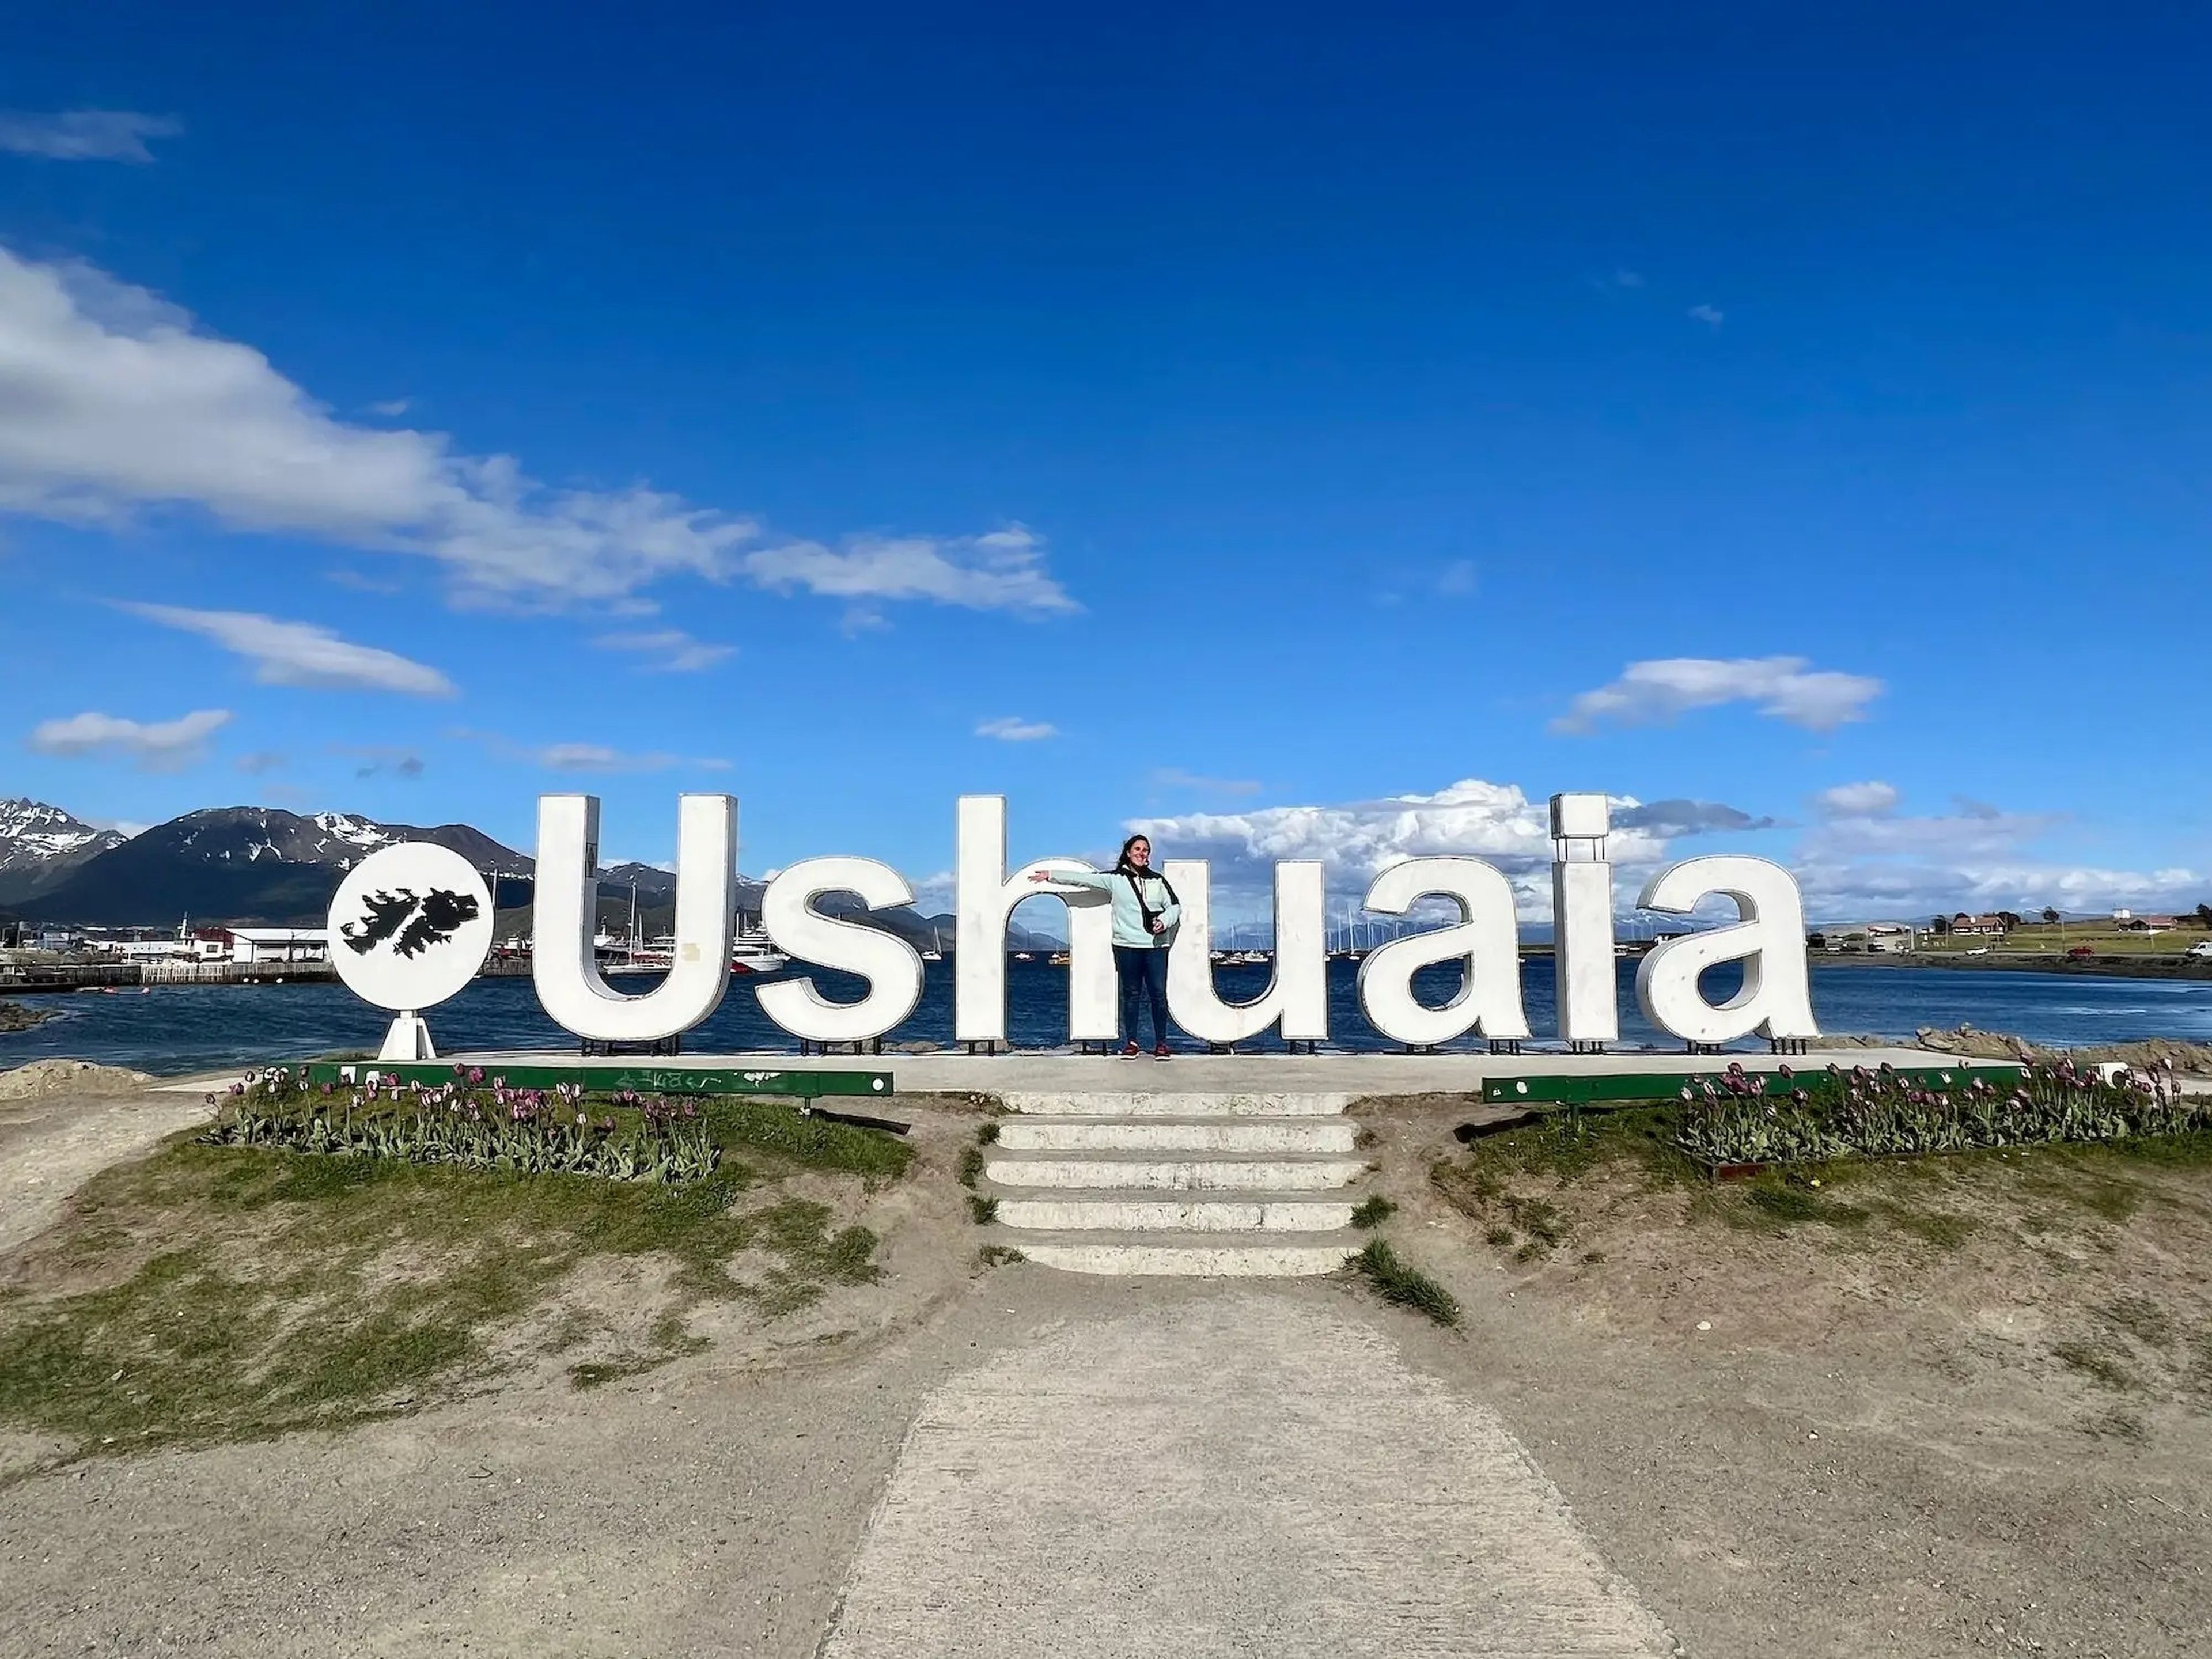 El cartel de Ushuaia en Argentina.